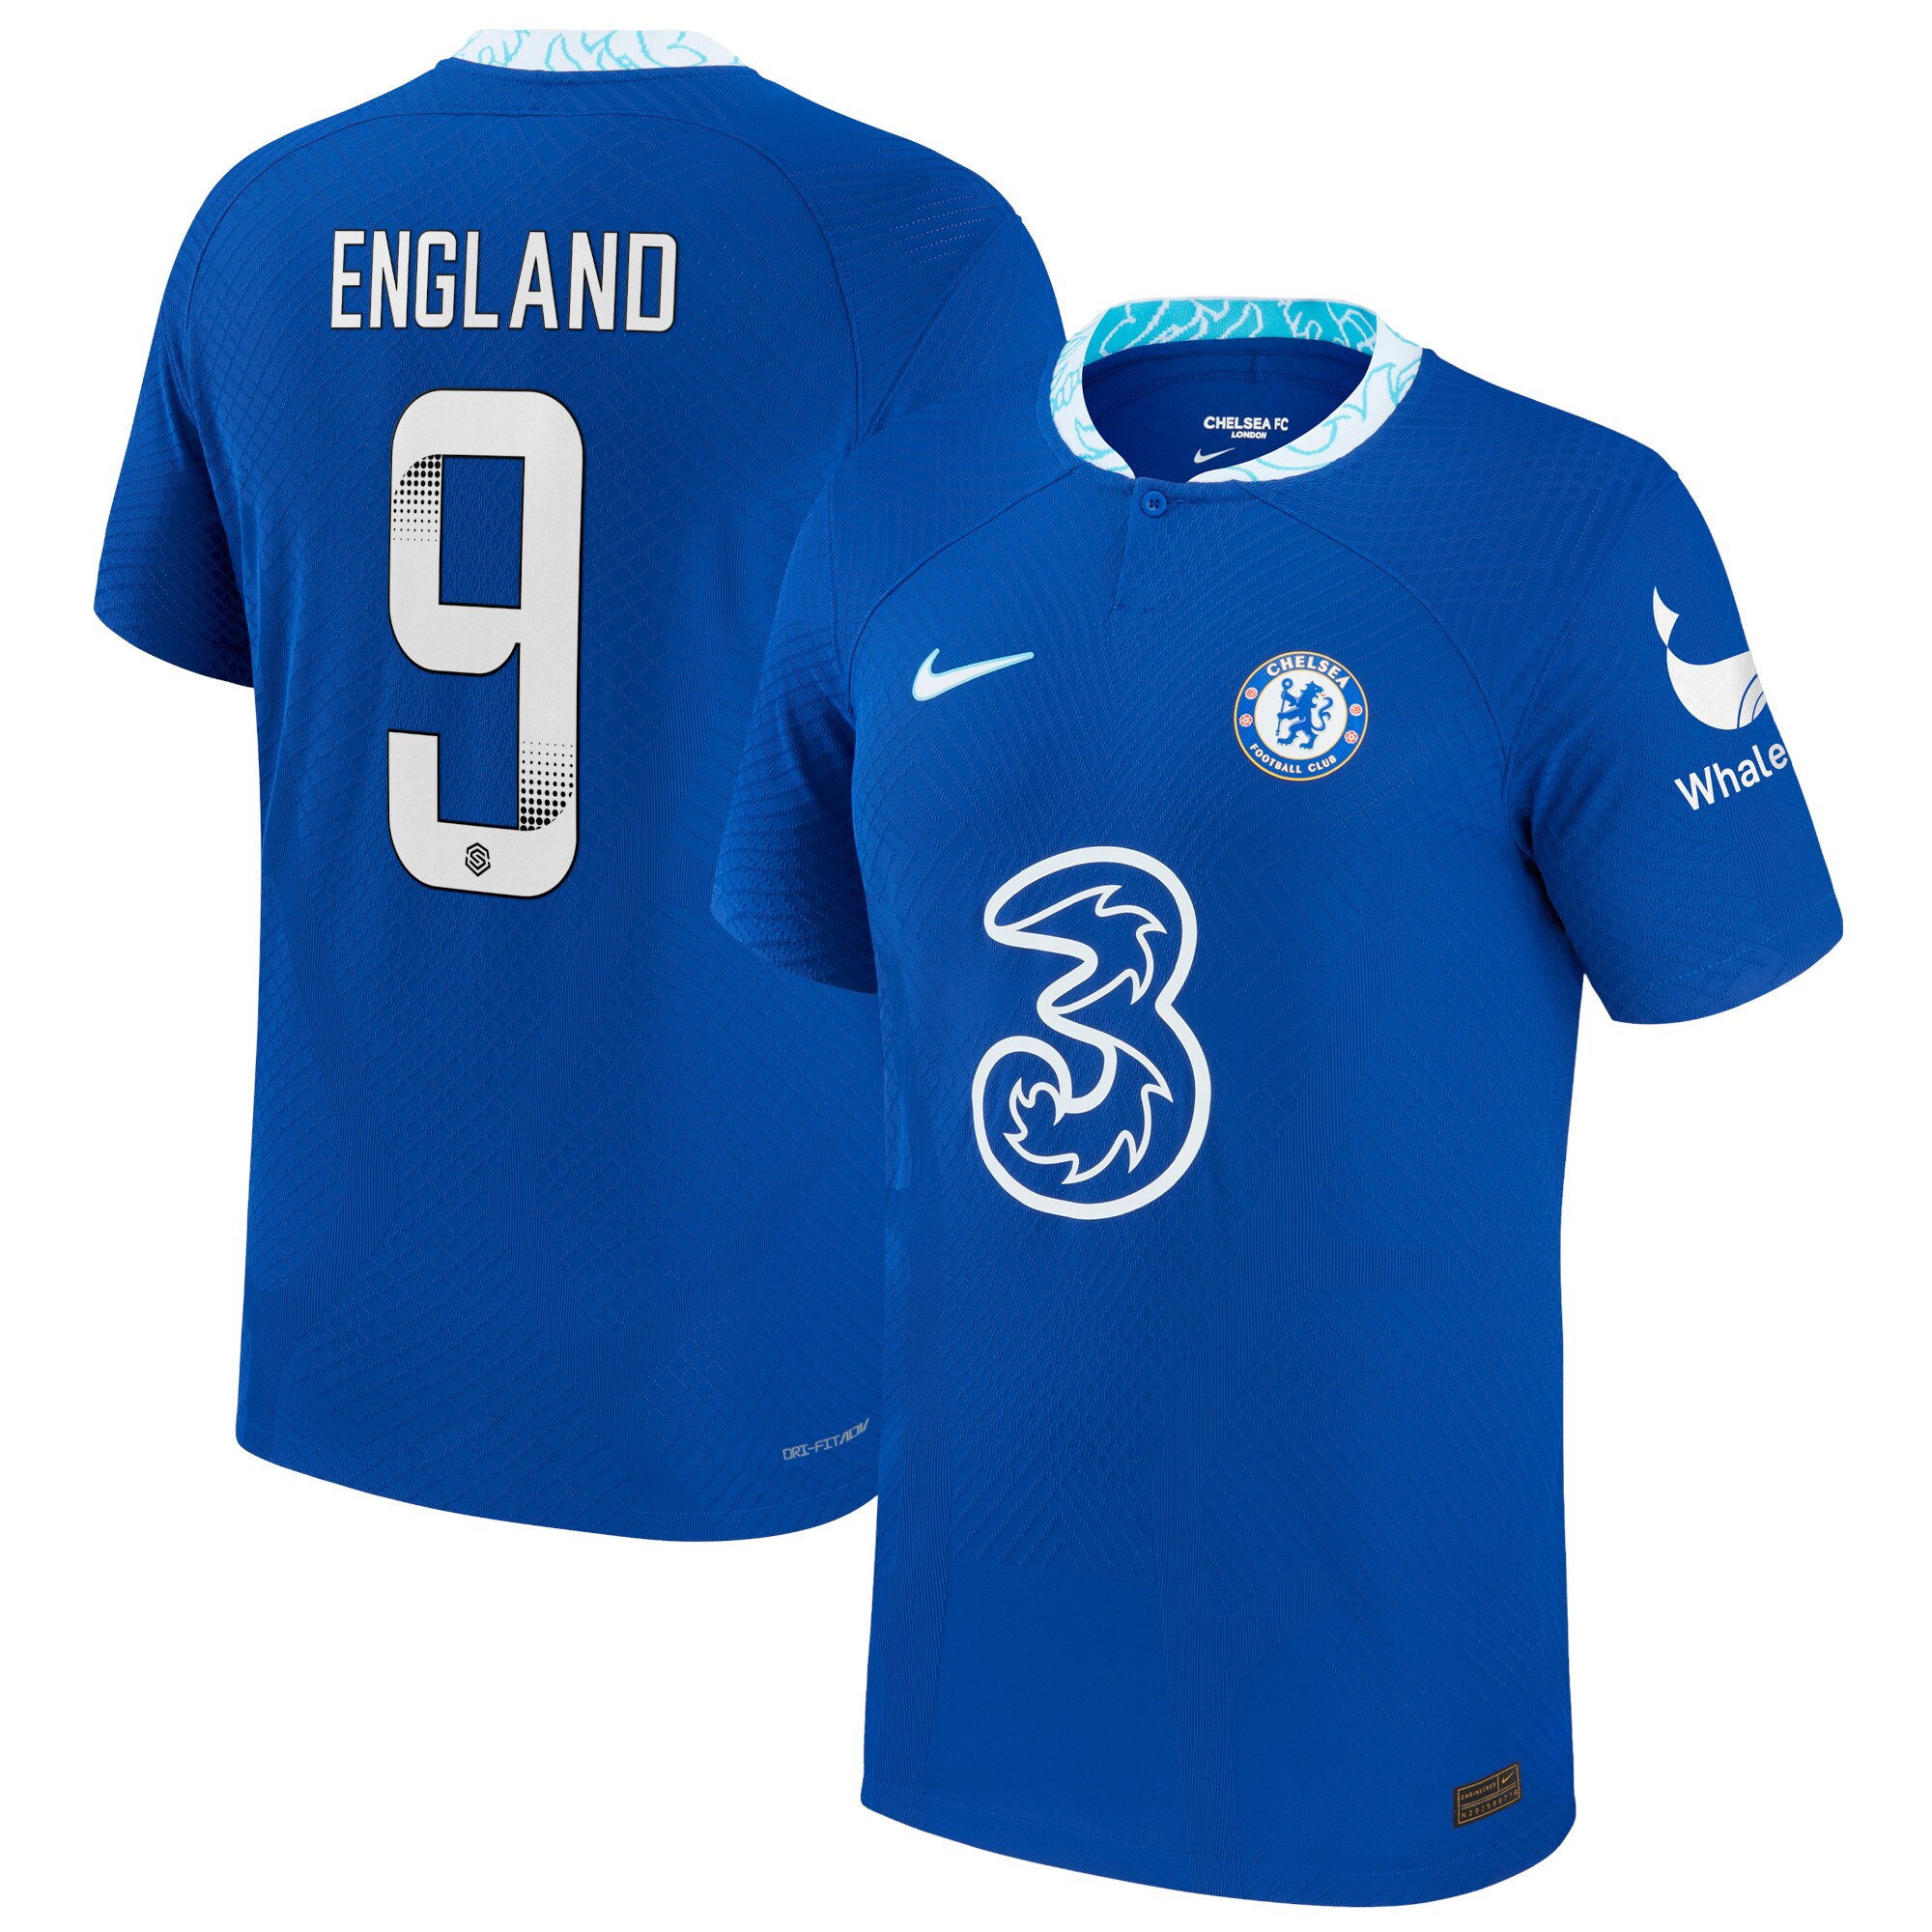 Chelsea WSL Home Vapor Match Shirt 2022-23 with England 9 printing